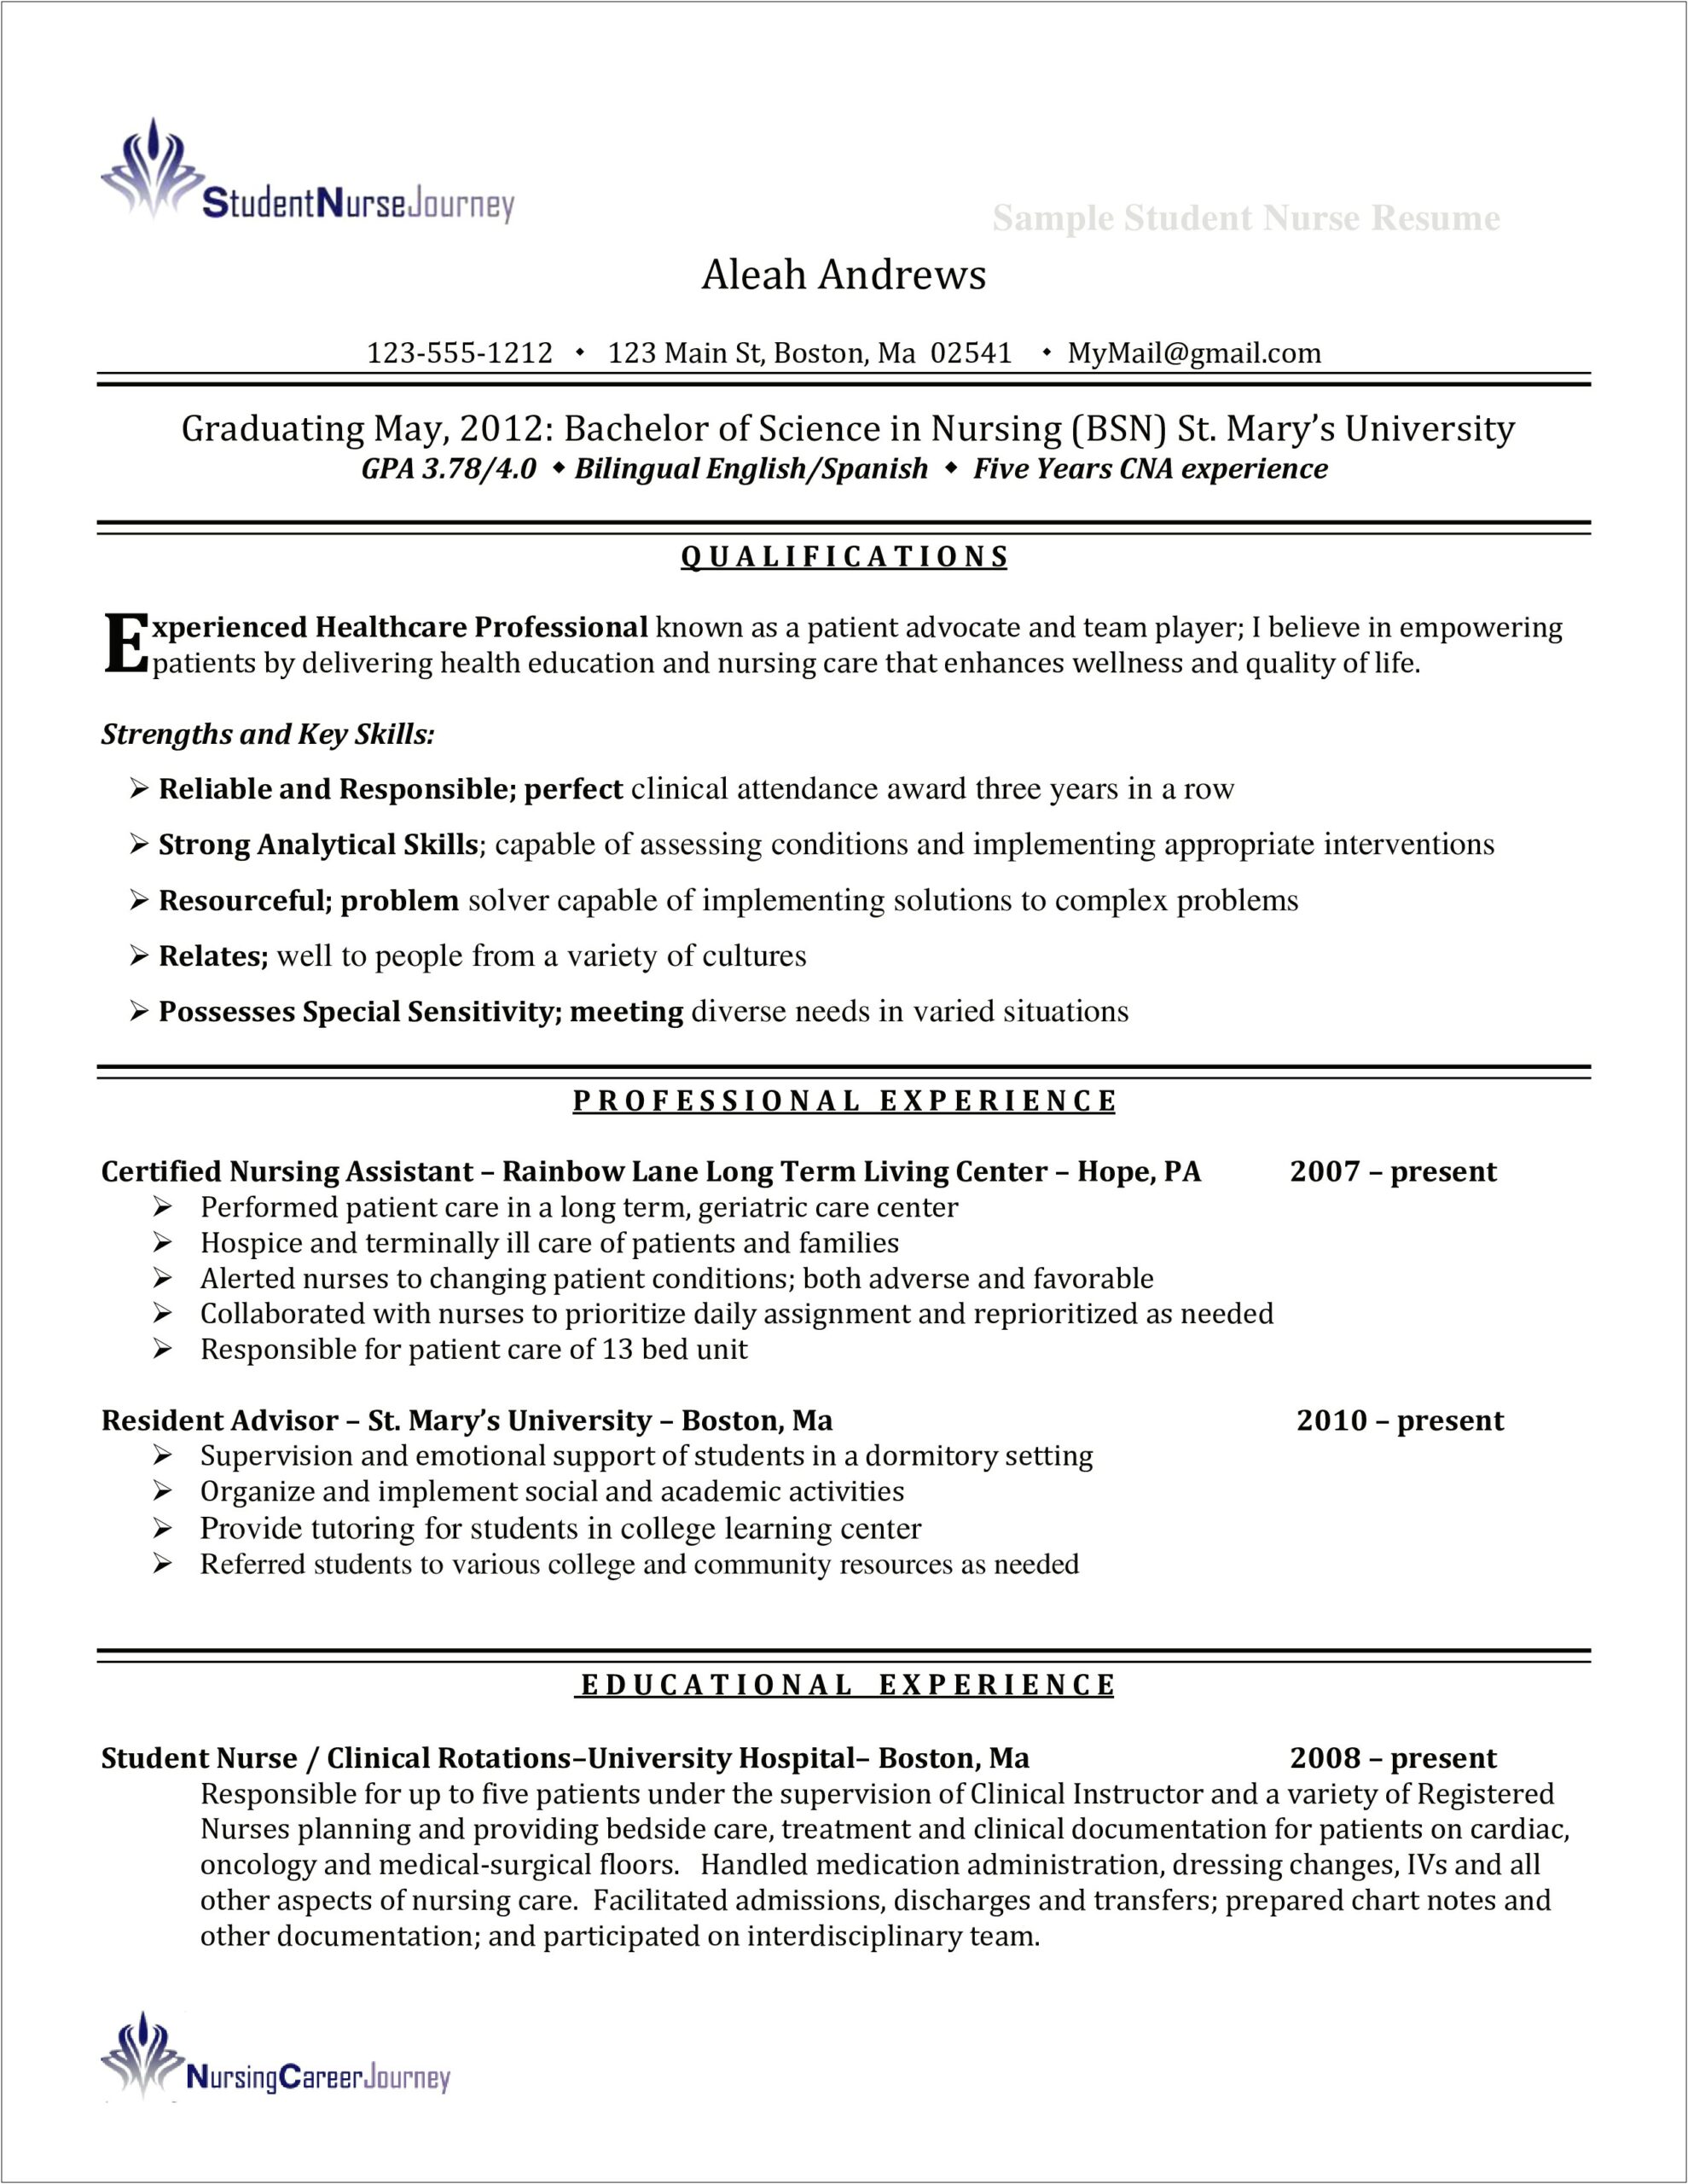 Nursing Student Resume Sample Form